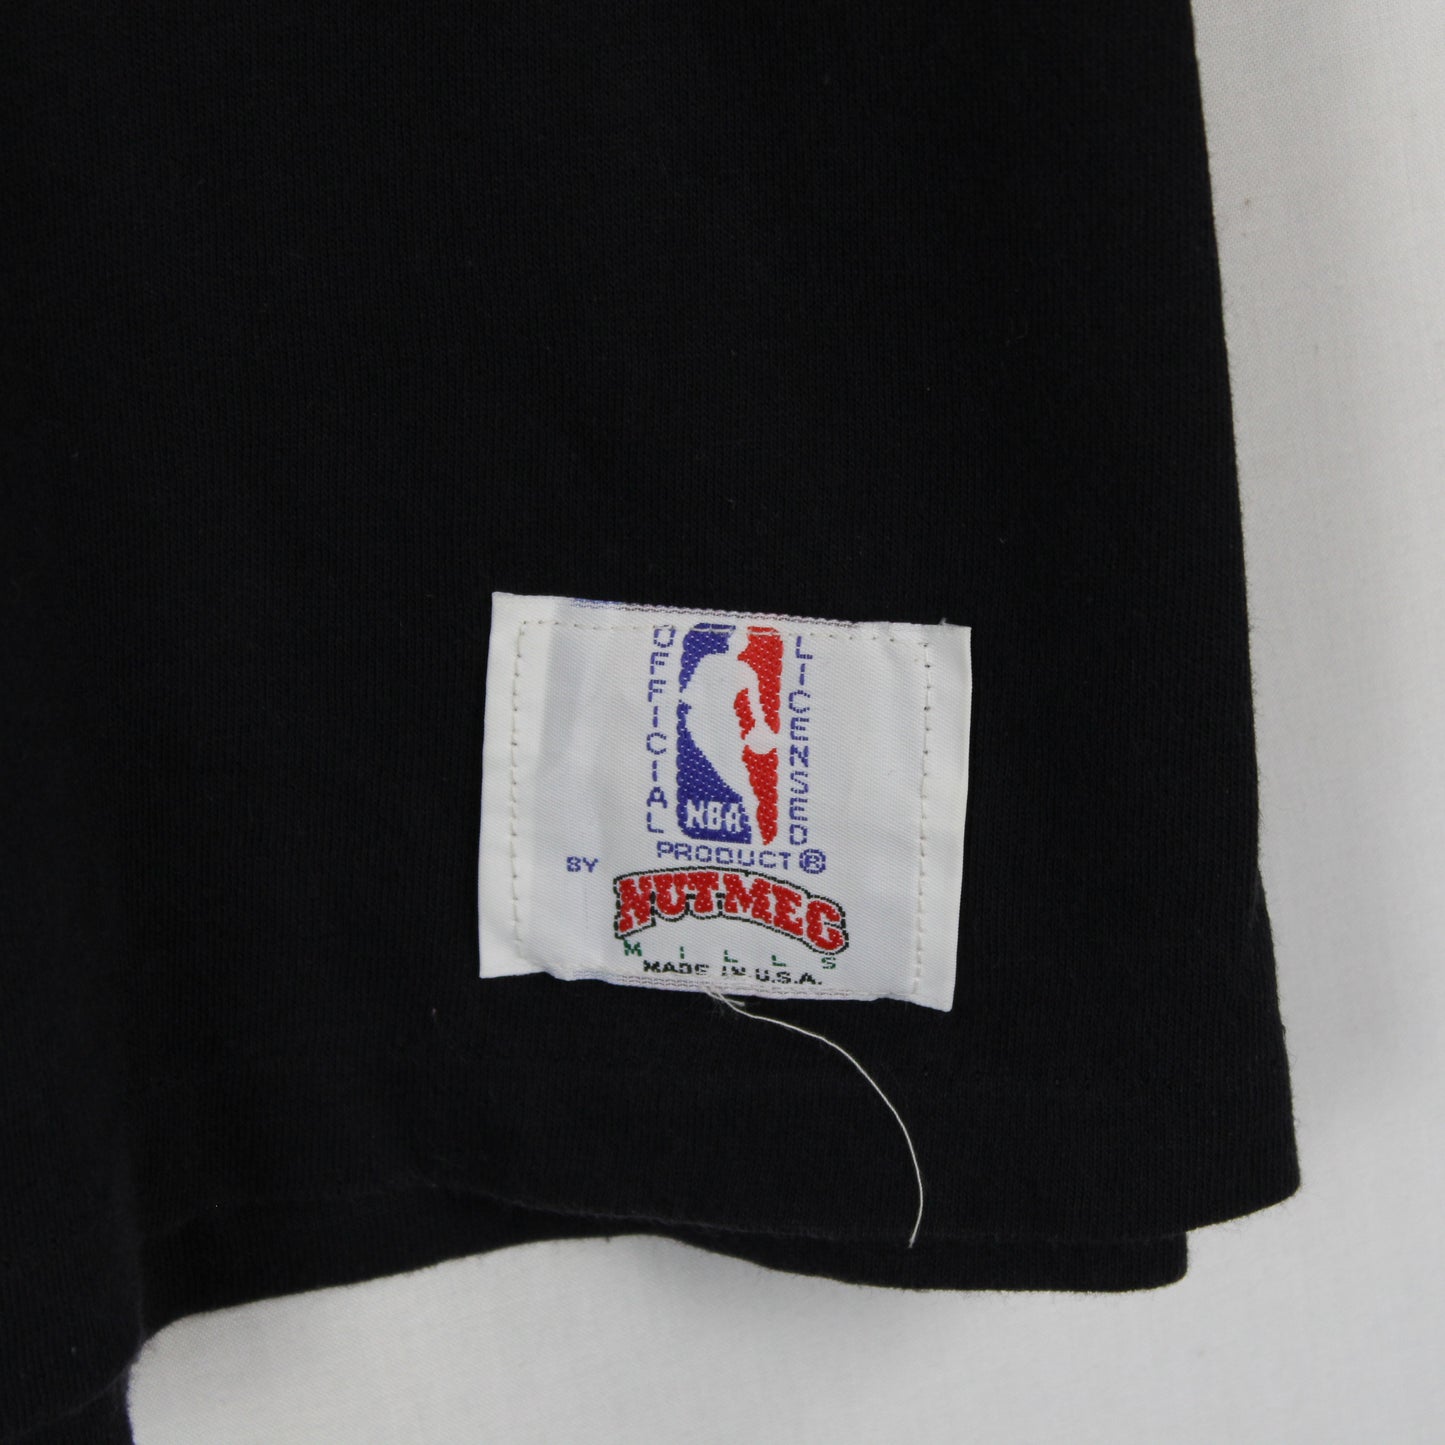 Vintage 1989 Detroit Pistons NBA Champions Tee - XL